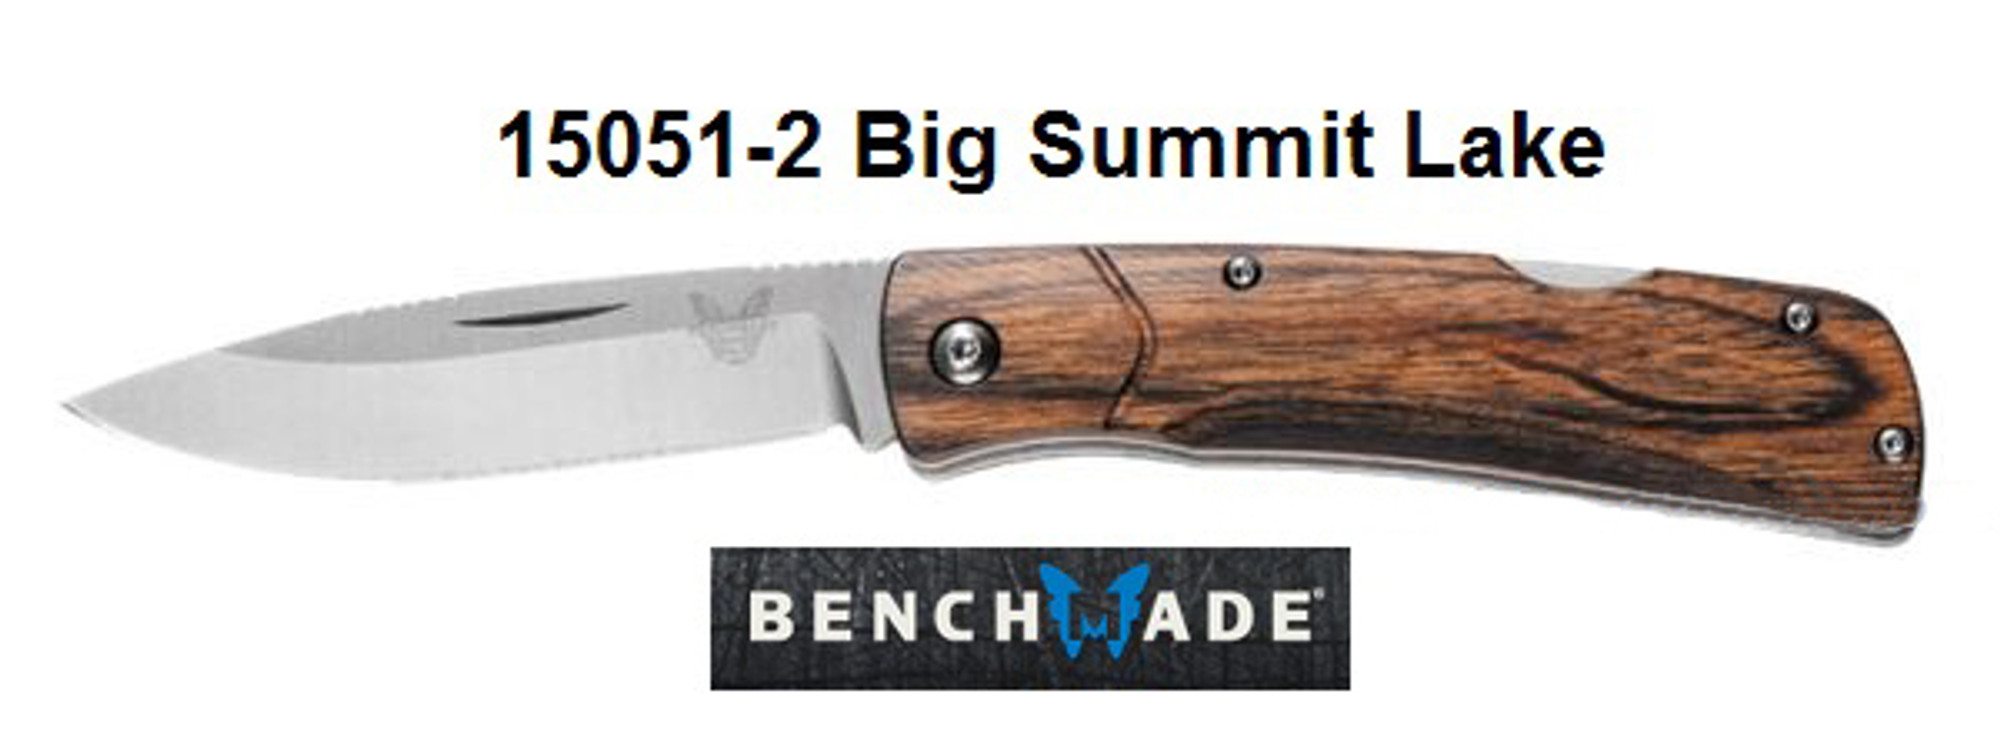 Benchmade 15051-2 Big Summit Lake Folder - Dymondwood Handle